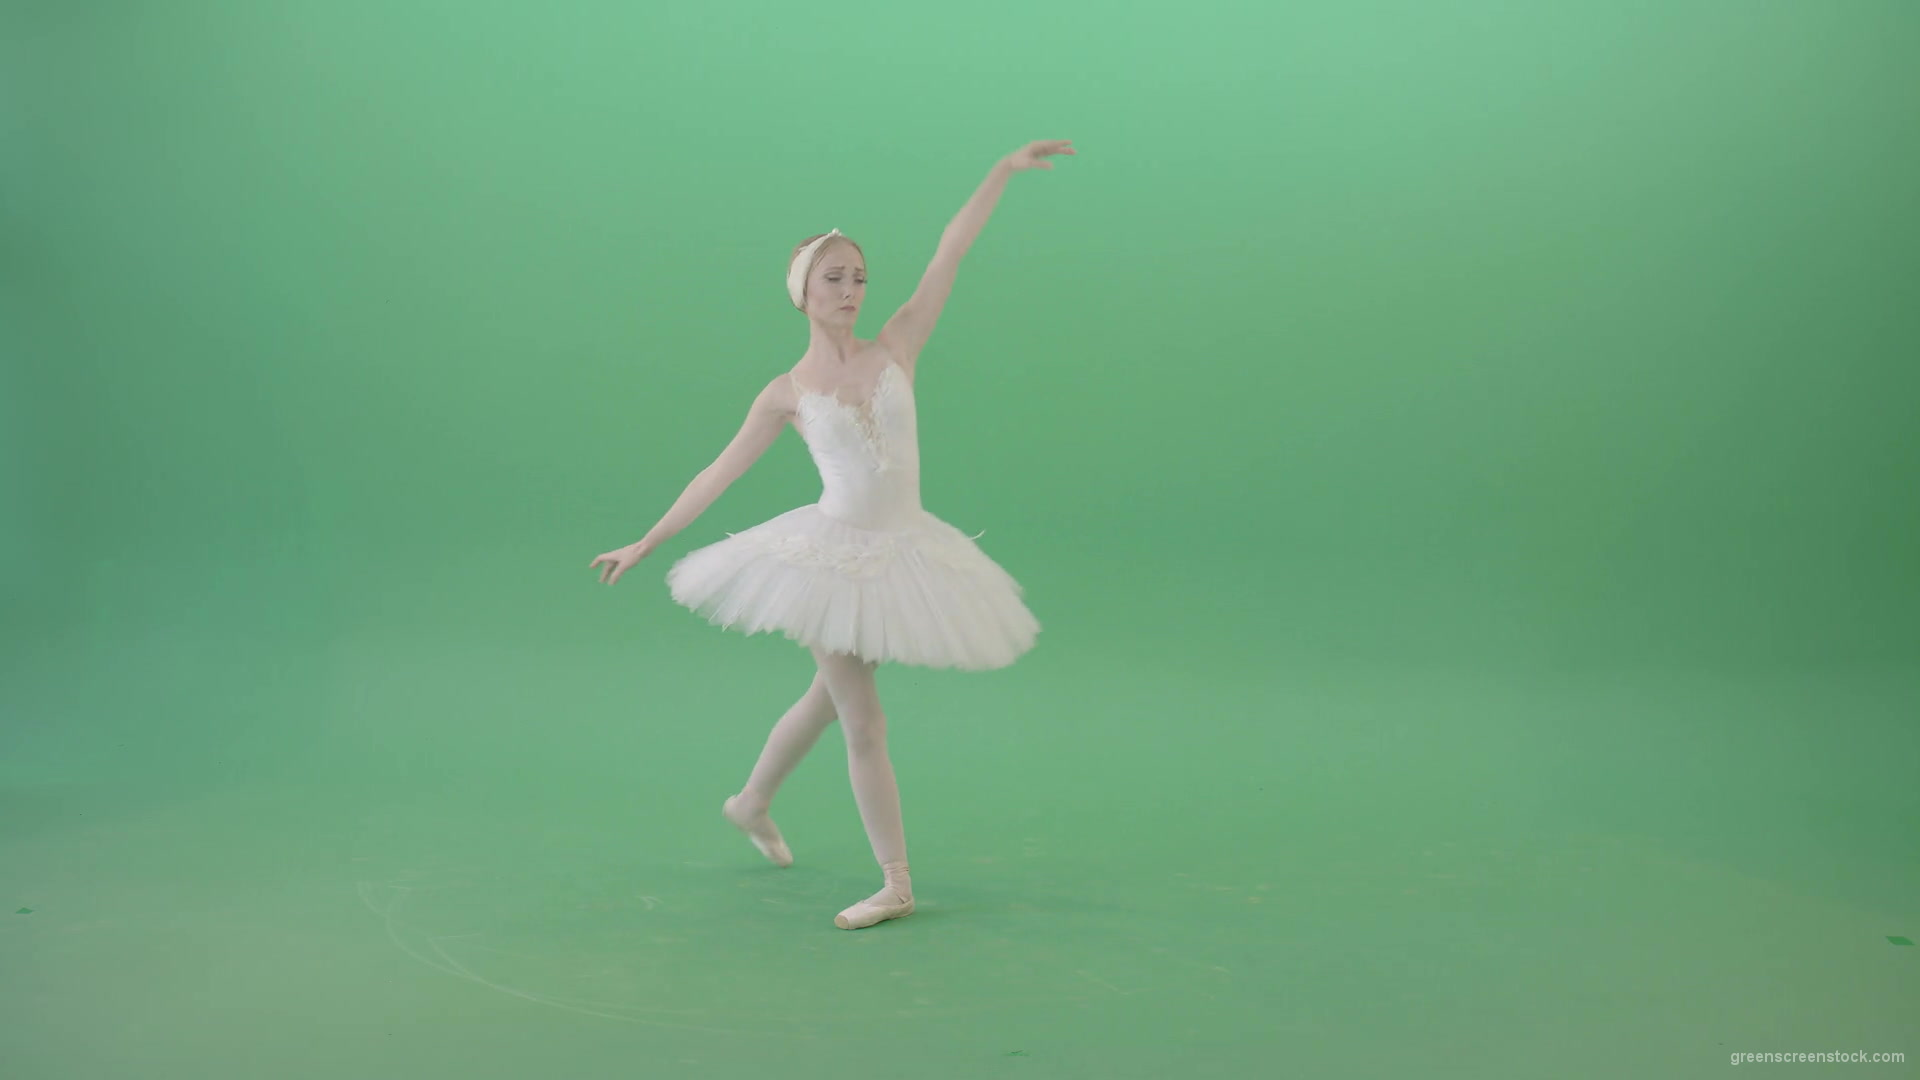 Beautifull-Swan-Lake-Ballerina-waving-hand-wigns-on-green-screen-4K-Video-Footage-1920_004 Green Screen Stock